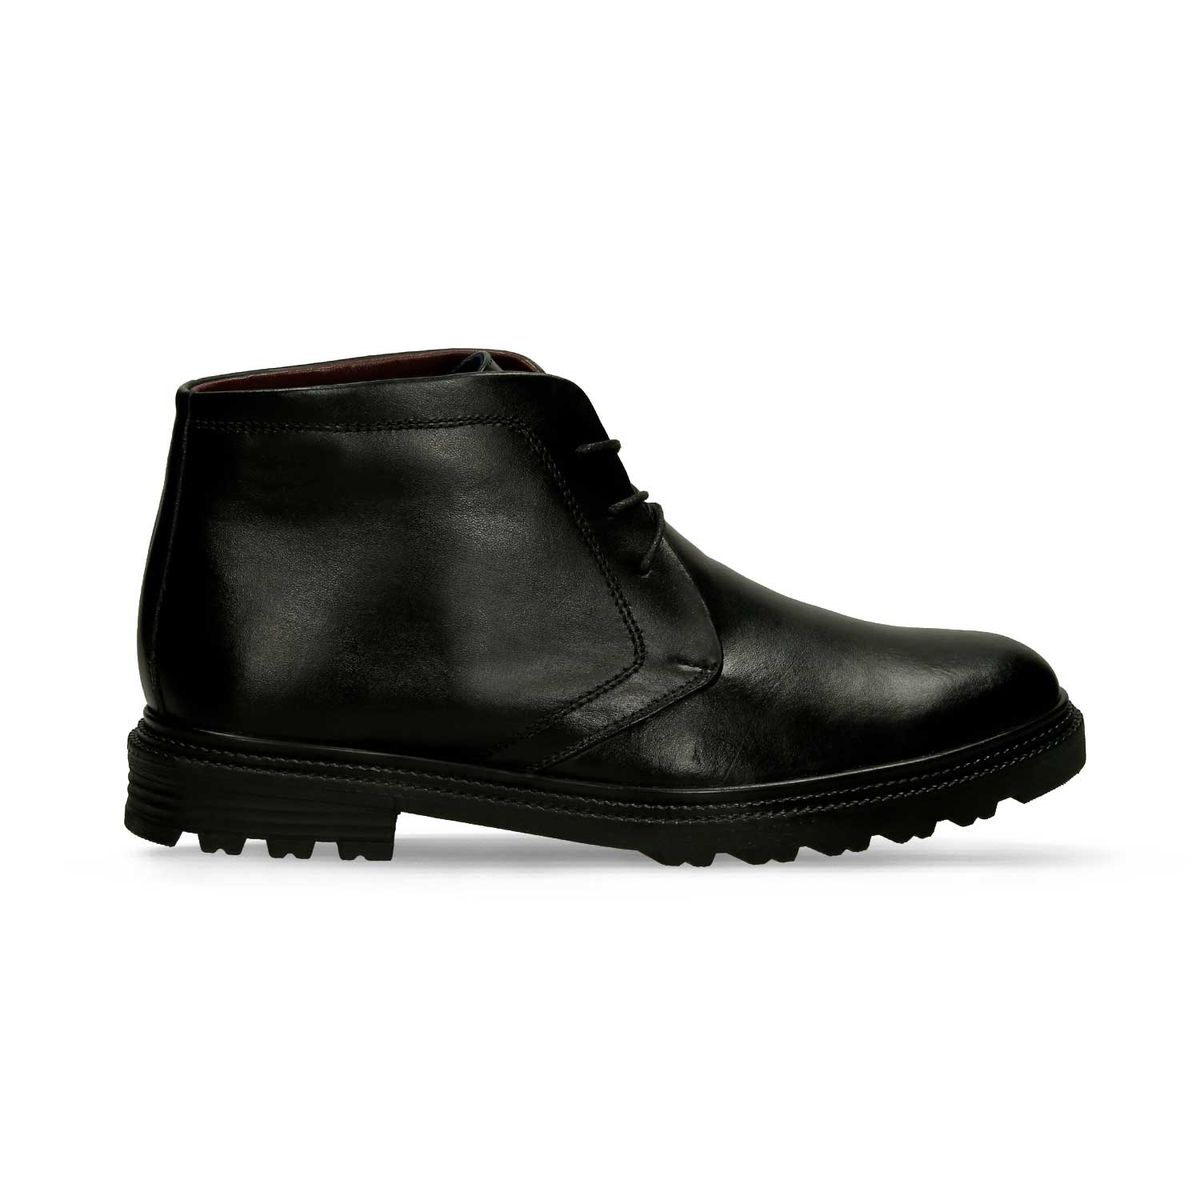 Zapatos Formales Negro Bata Gandía Boot Hombre